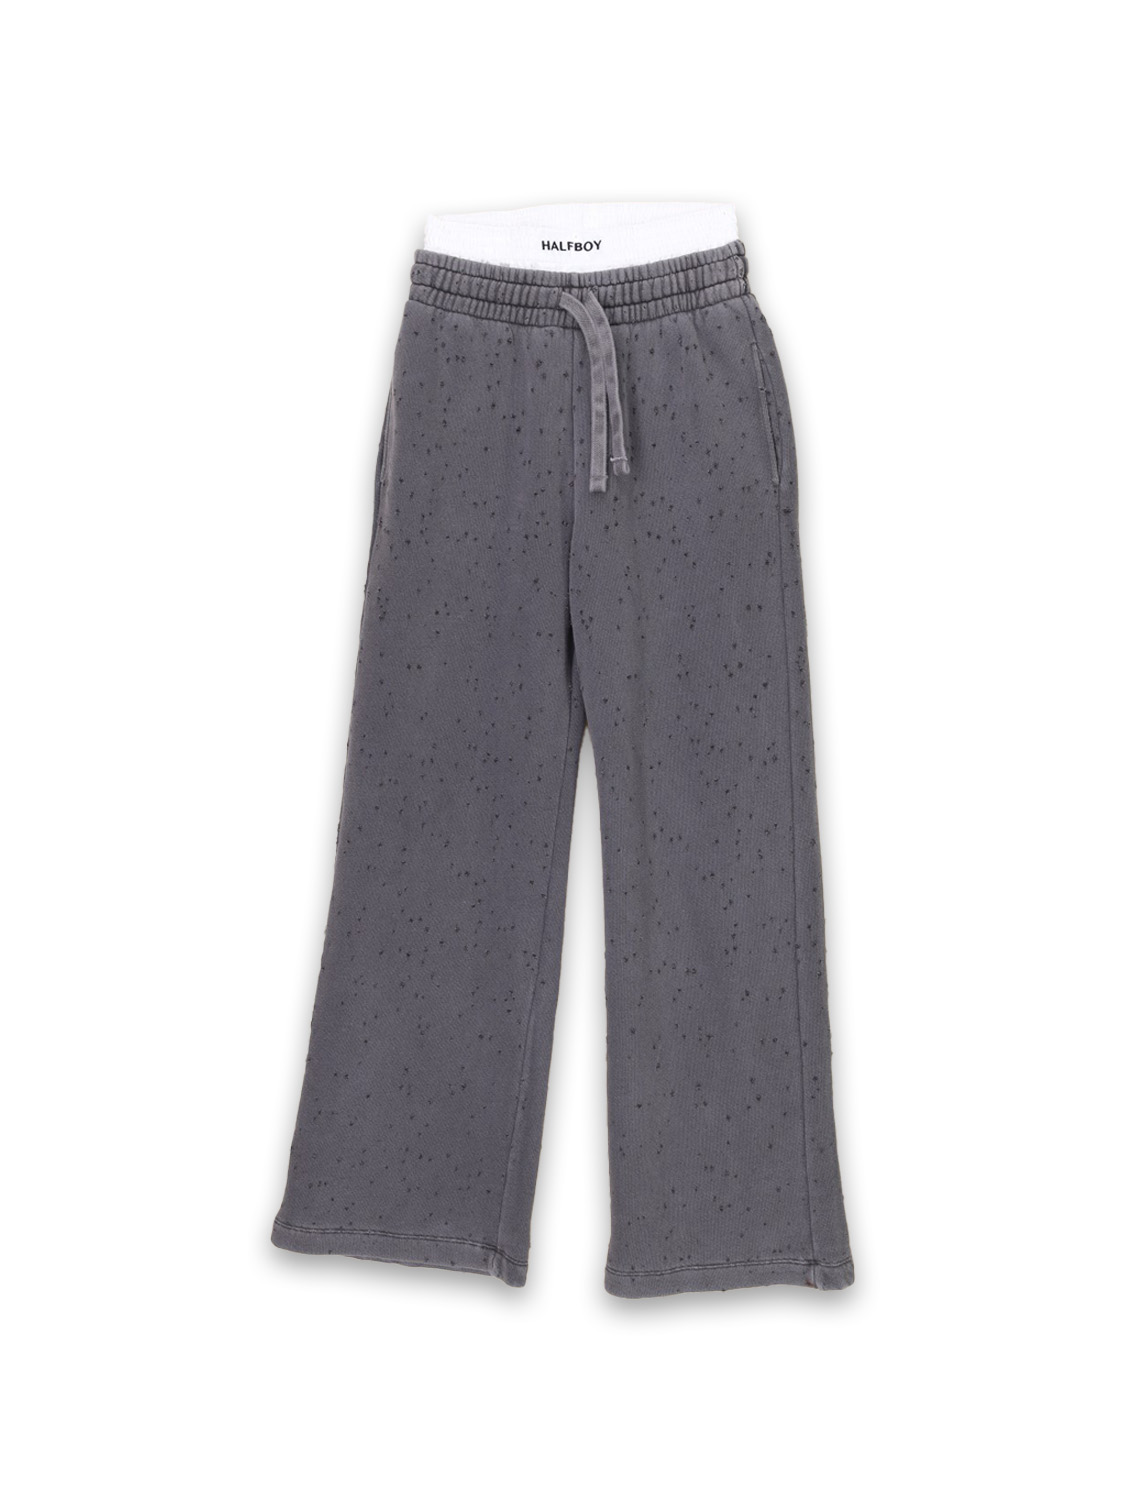 Halfboy Jogger - Jogging pants with wide leg   grey XS